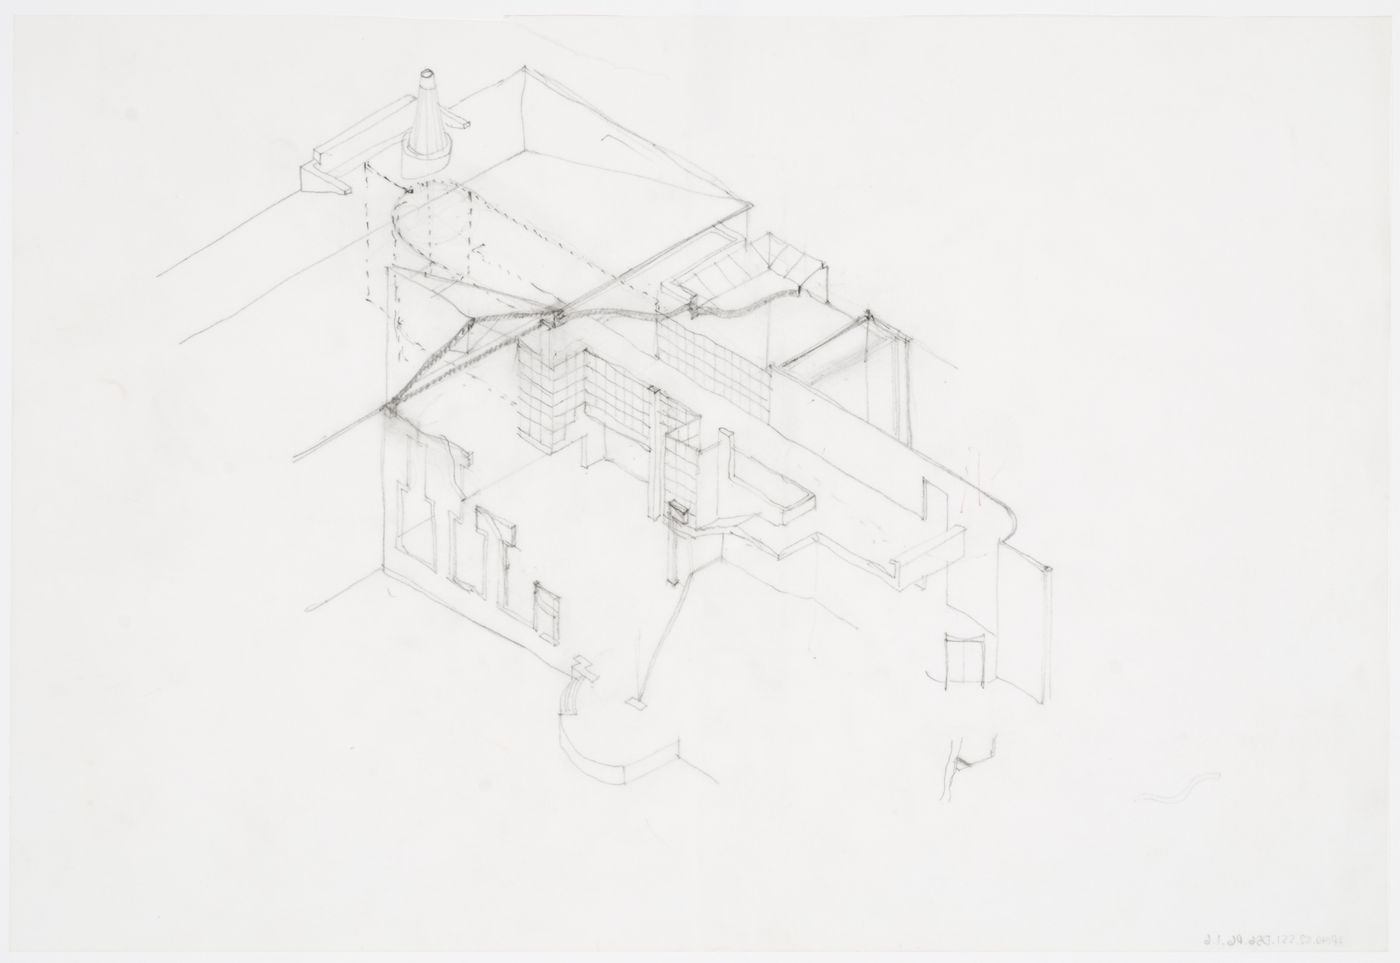 School of Architecture Addition, Rice University, Houston, Texas: axonometric sketch